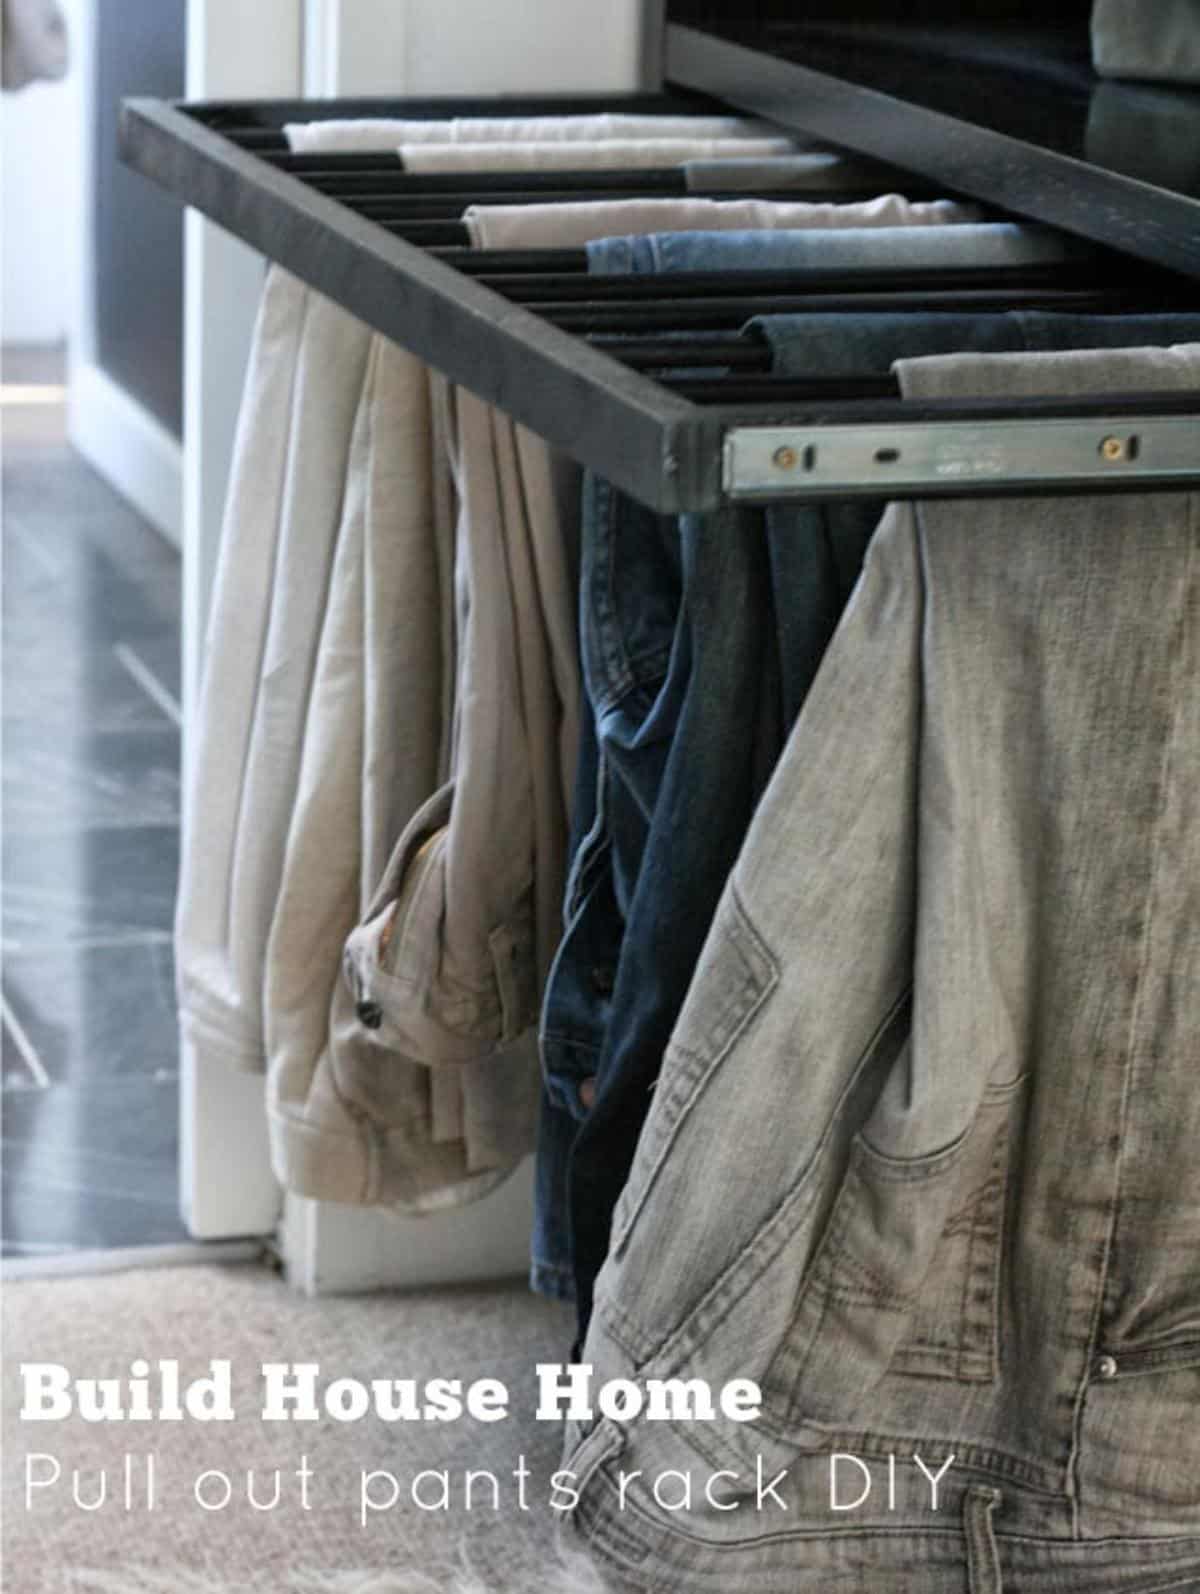 DIY Pull-out pants rack.